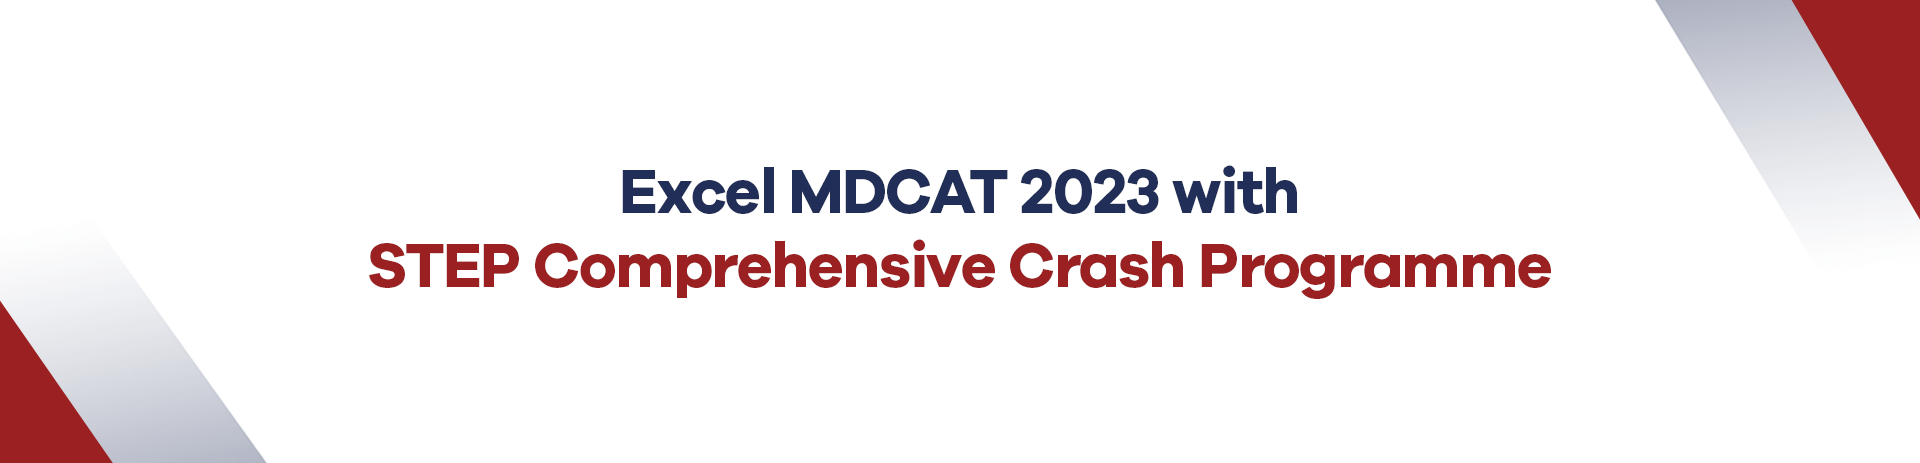 Excel MDCAT 2023 with STEP Comprehensive Crash Programme